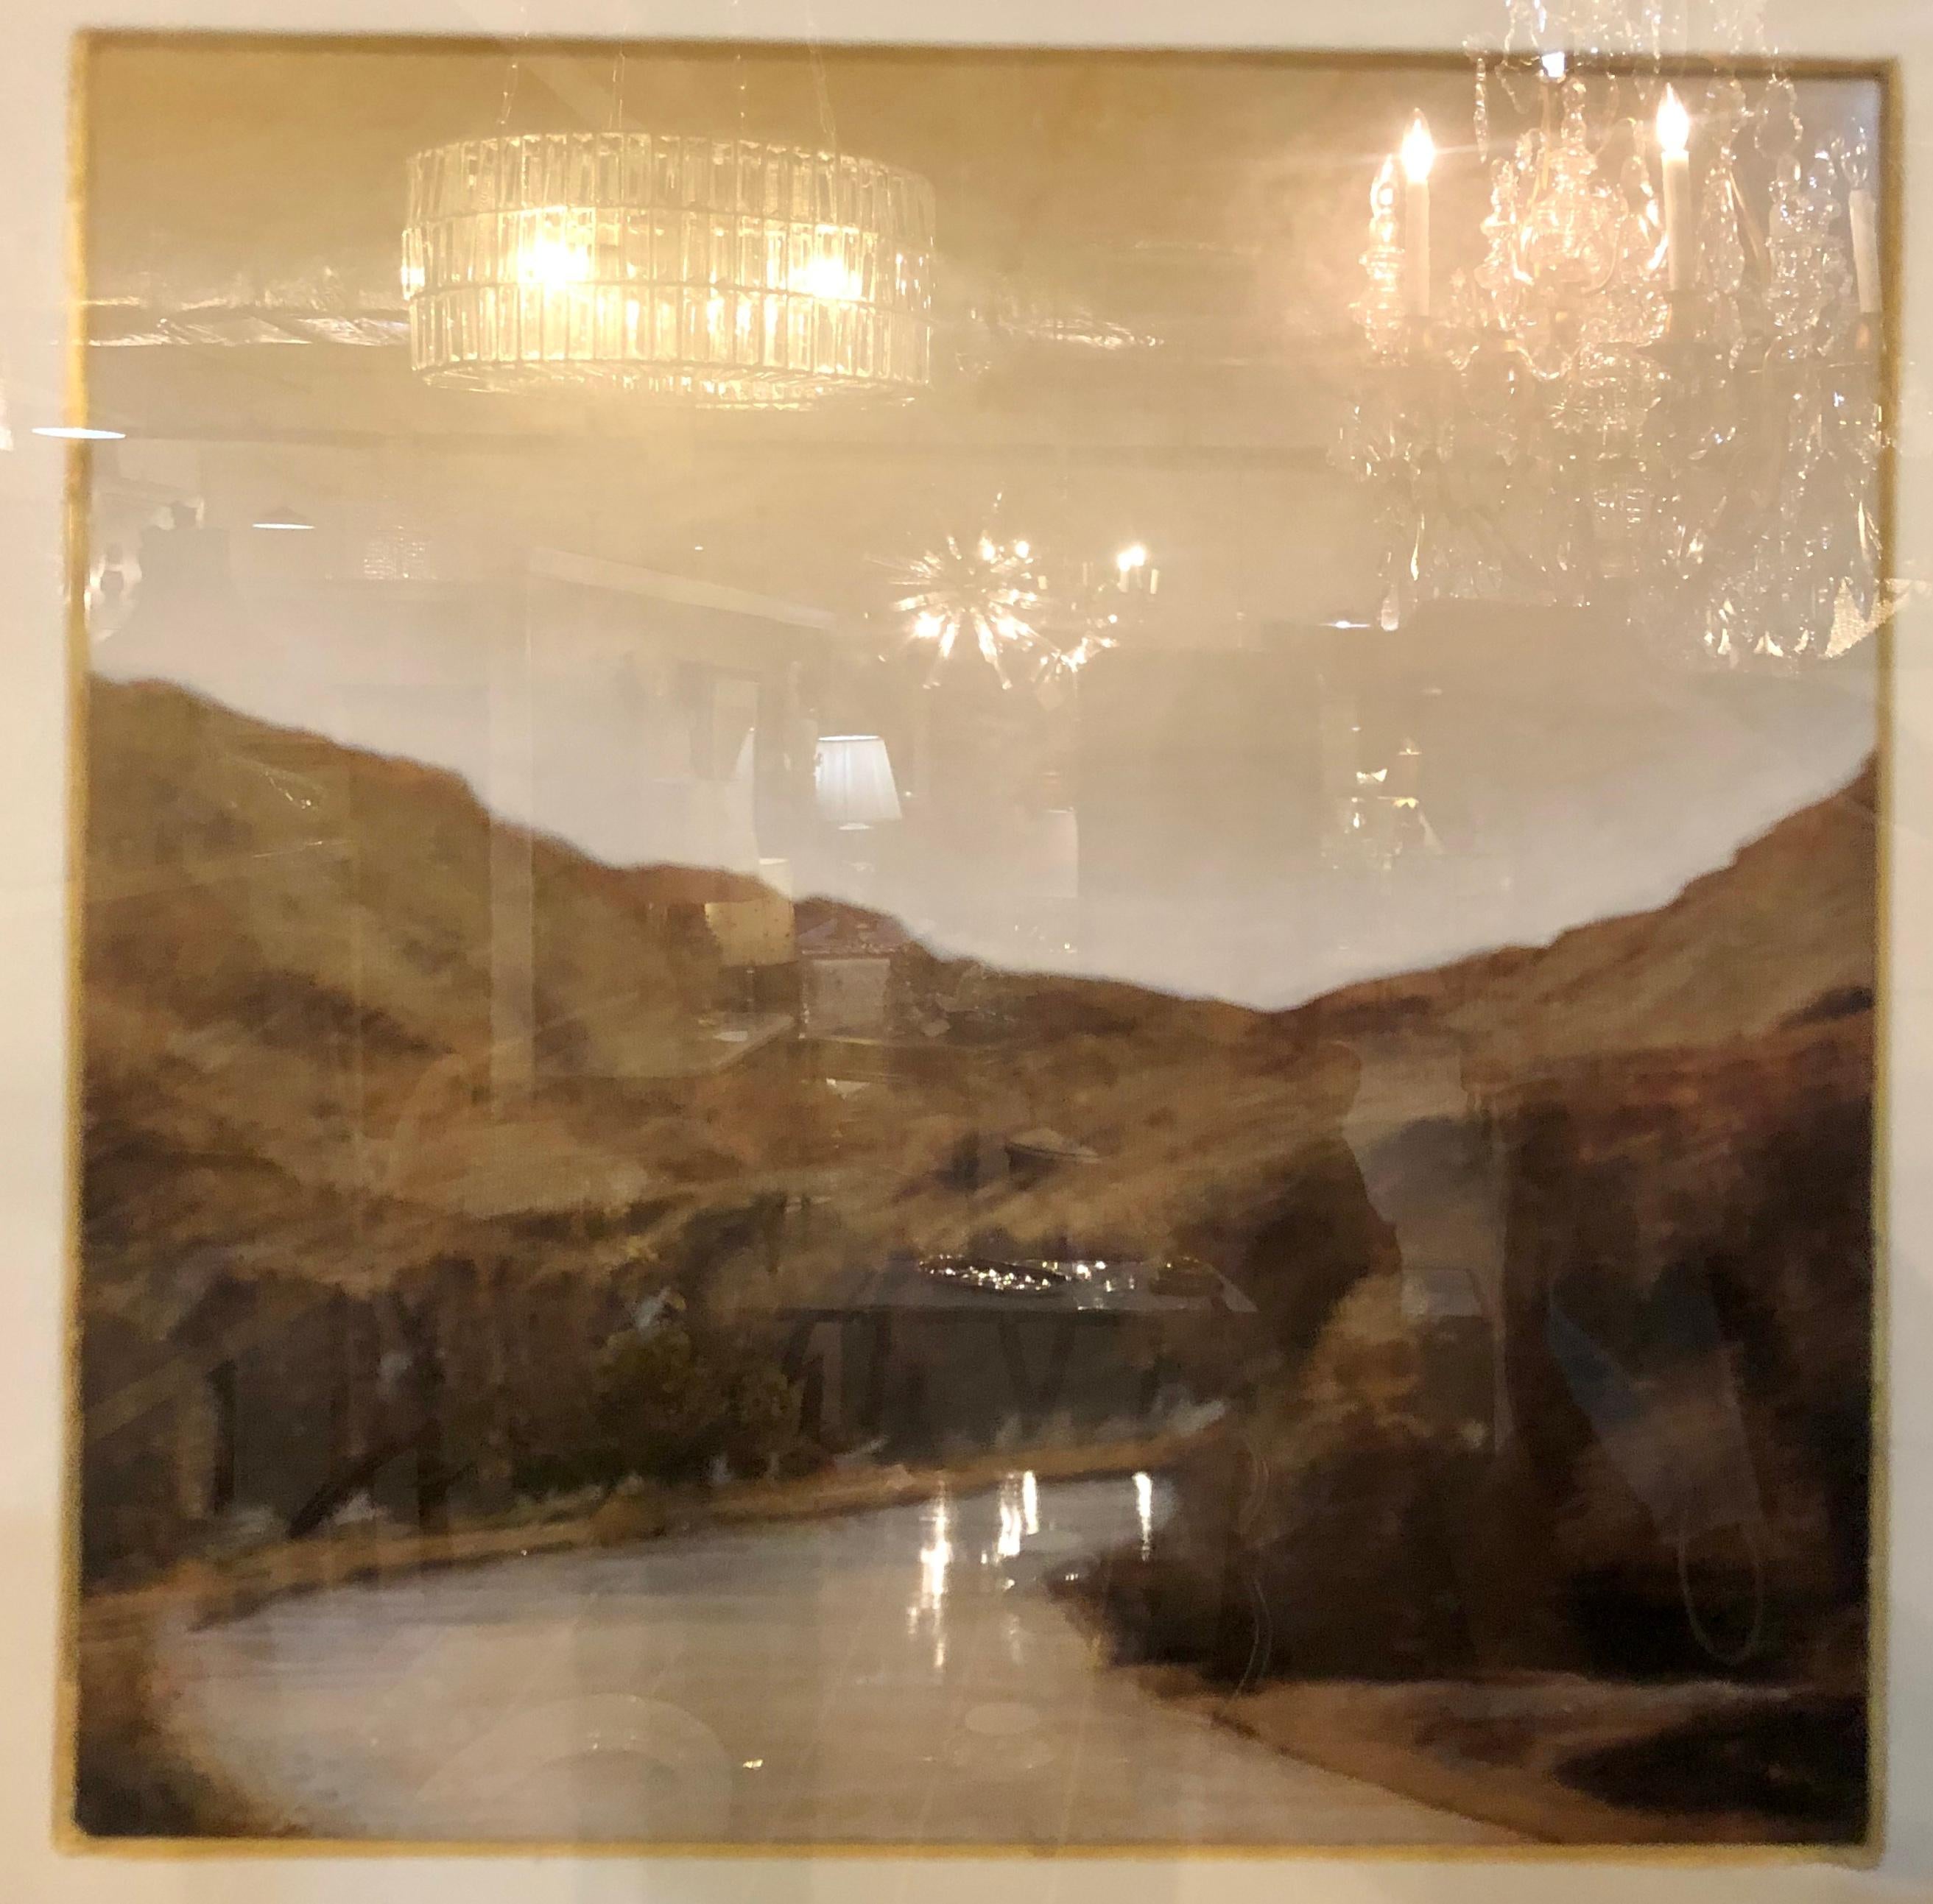 Adirondack Set of Four Prints in Trowbridge Gallery Frames, Lake and River Scenes